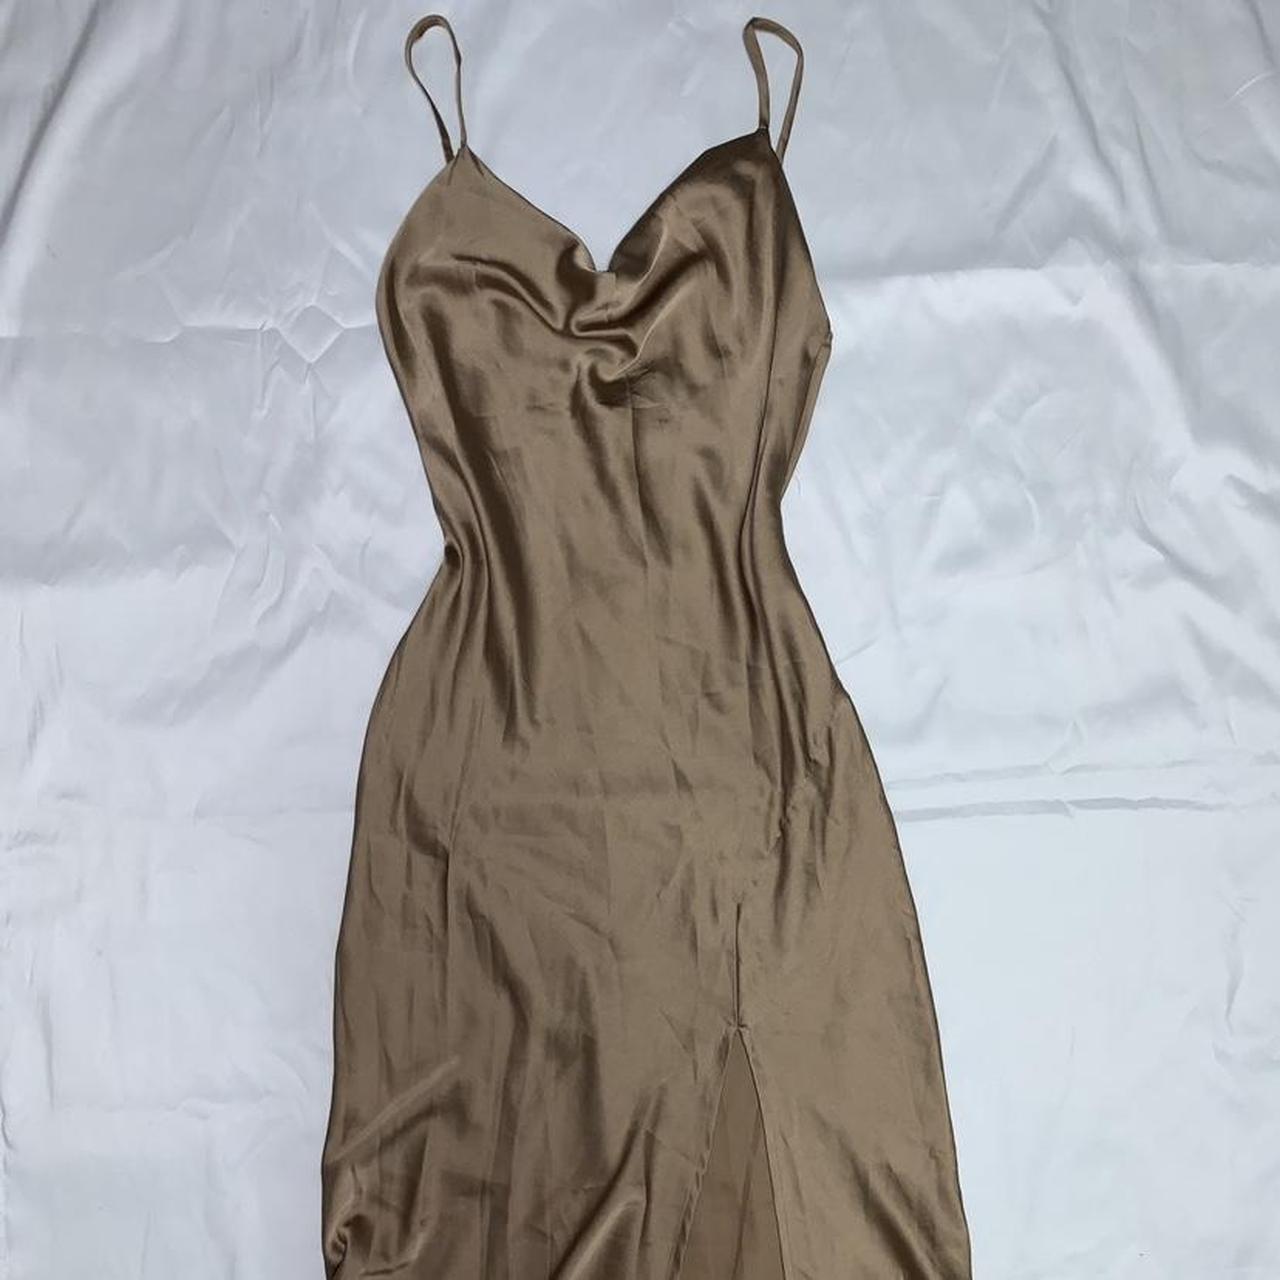 Nude Gold Satin-silk slip dress (excellent... - Depop